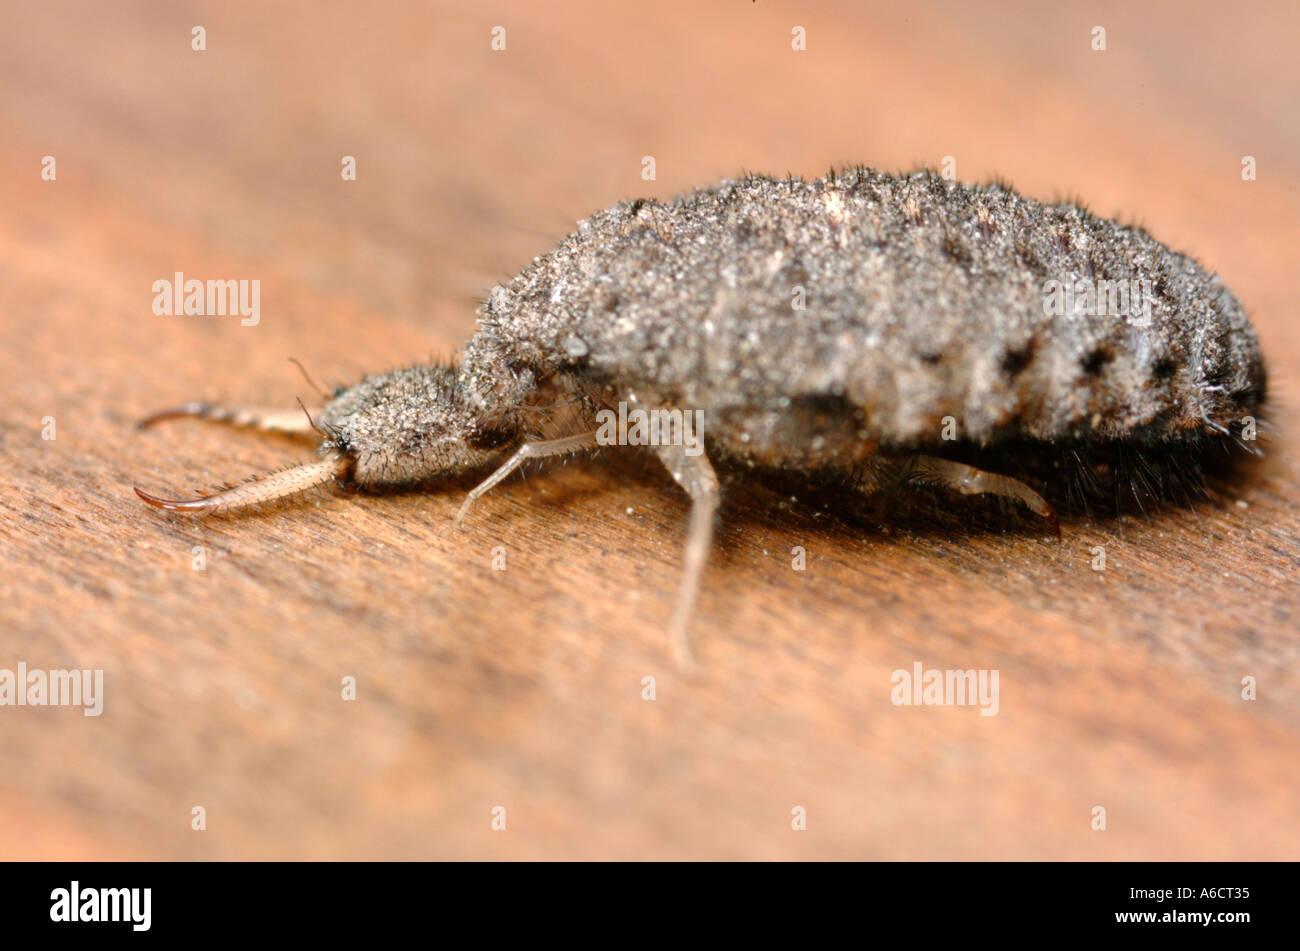 Doodlebug (Antlion larva) - Myrmeleon 